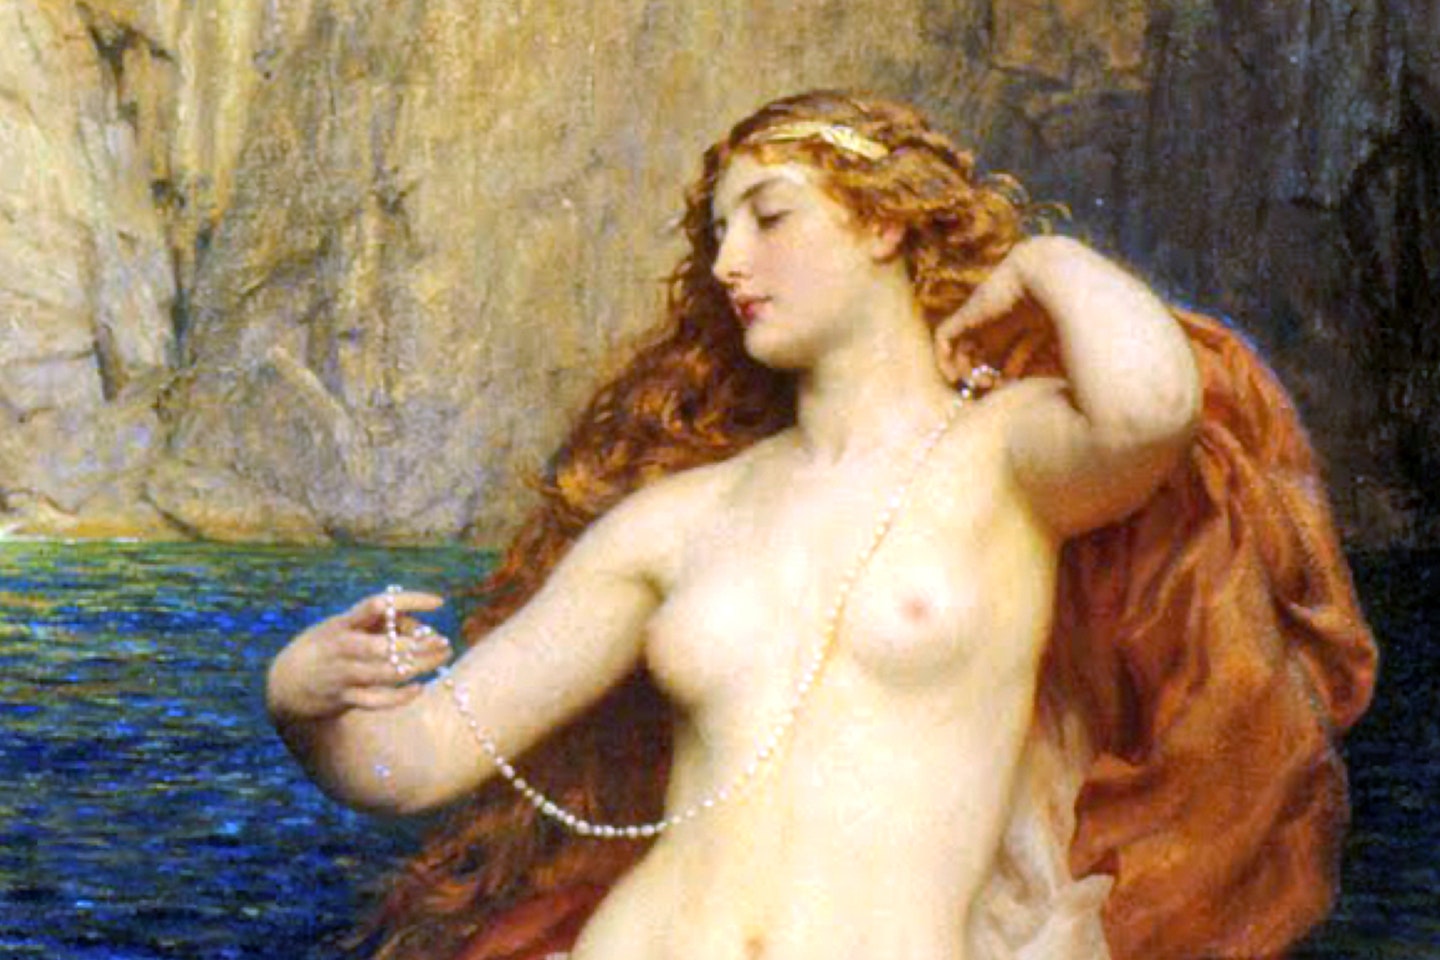 Aphrodite, Greek Goddess of Love (3:2)